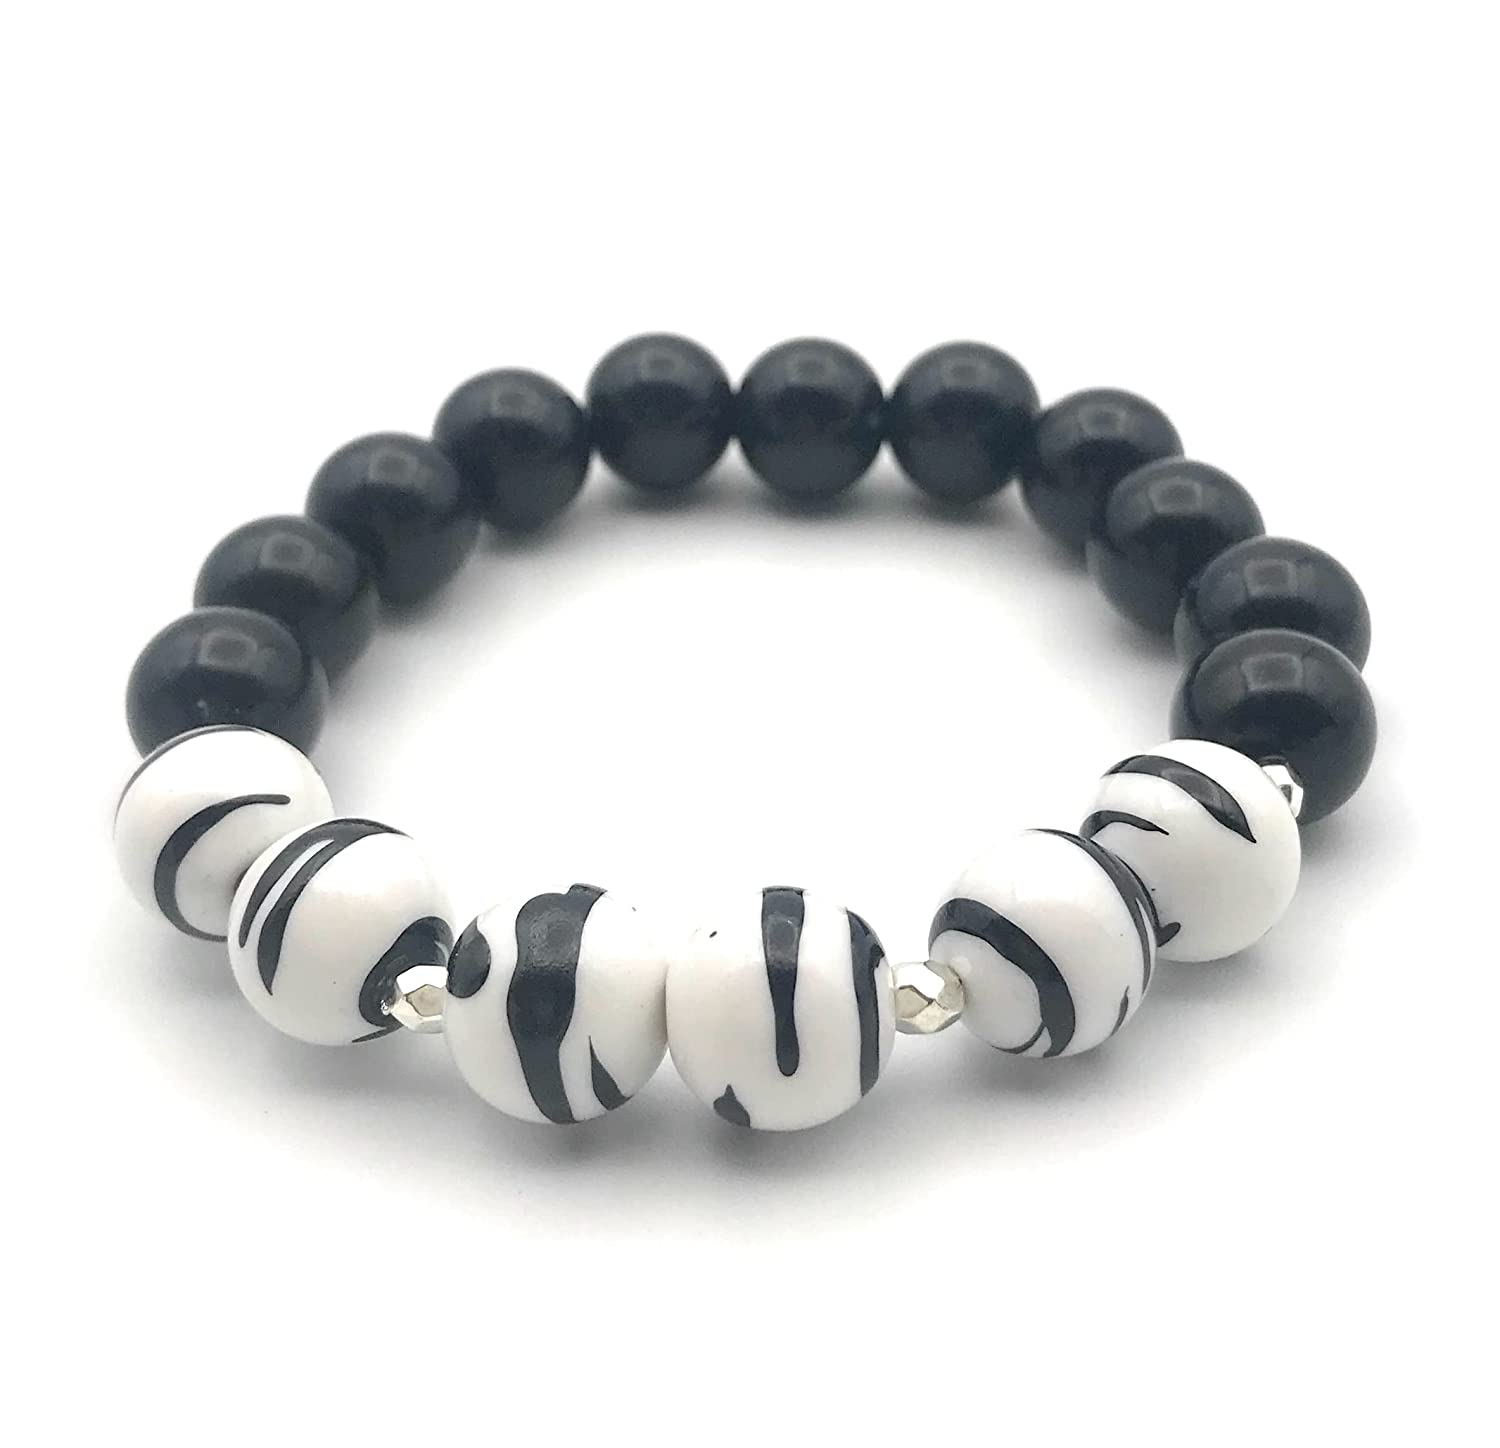 Black and White Elastic Bracelet from Scott D Jewelry Designs